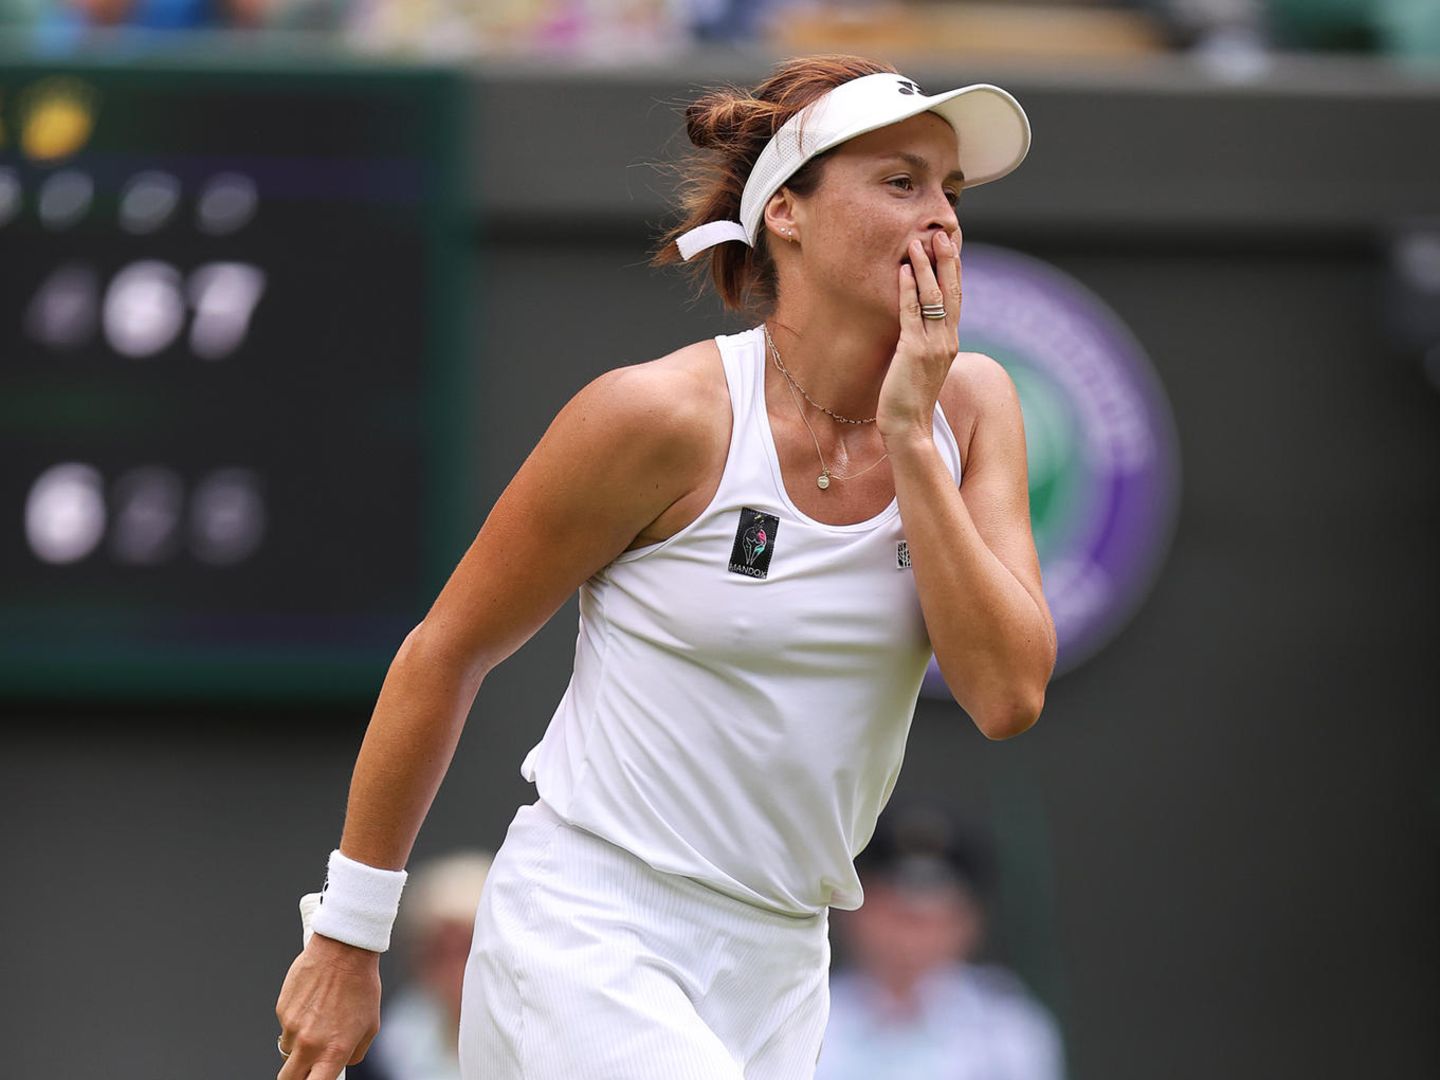 Tatjana Maria zieht gegen Niemeier sensationell ins Wimbledon-Halbfinale ein STERN.de